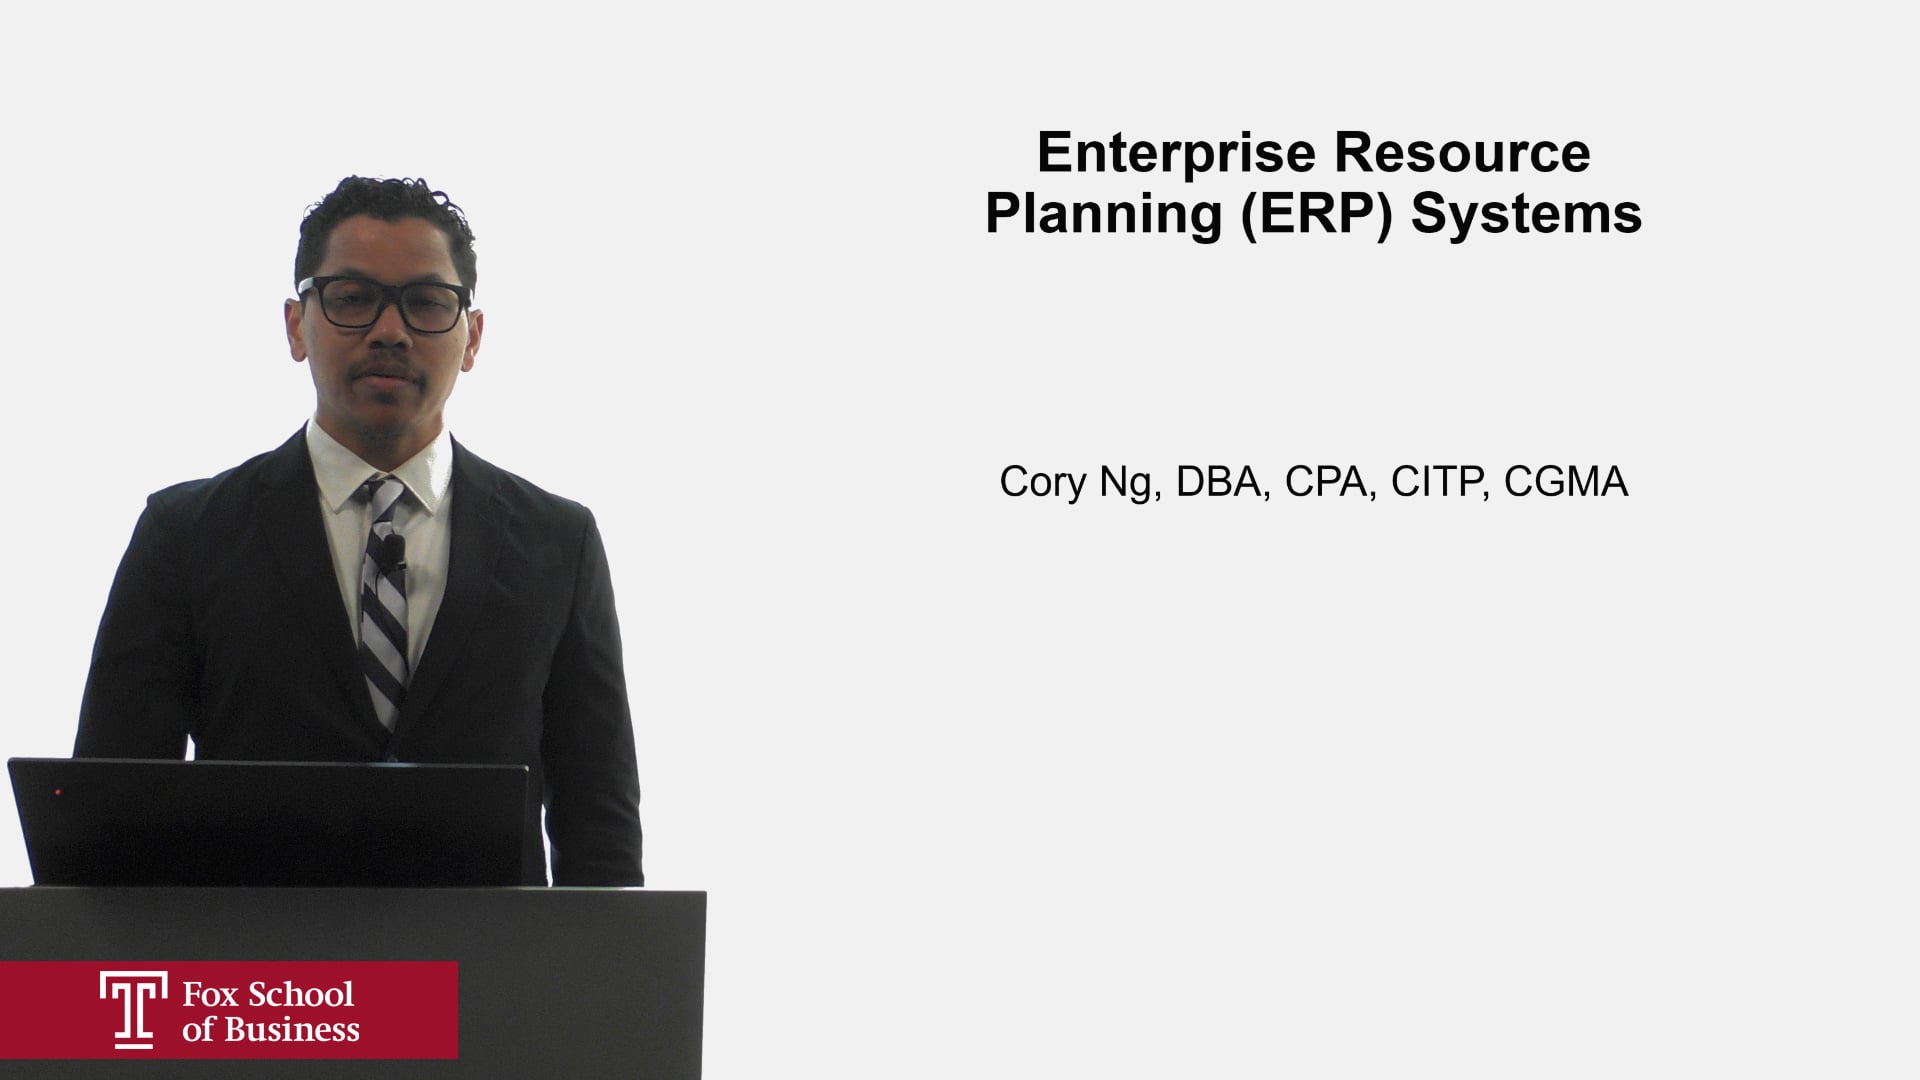 Enterprise Resource Planning Systems